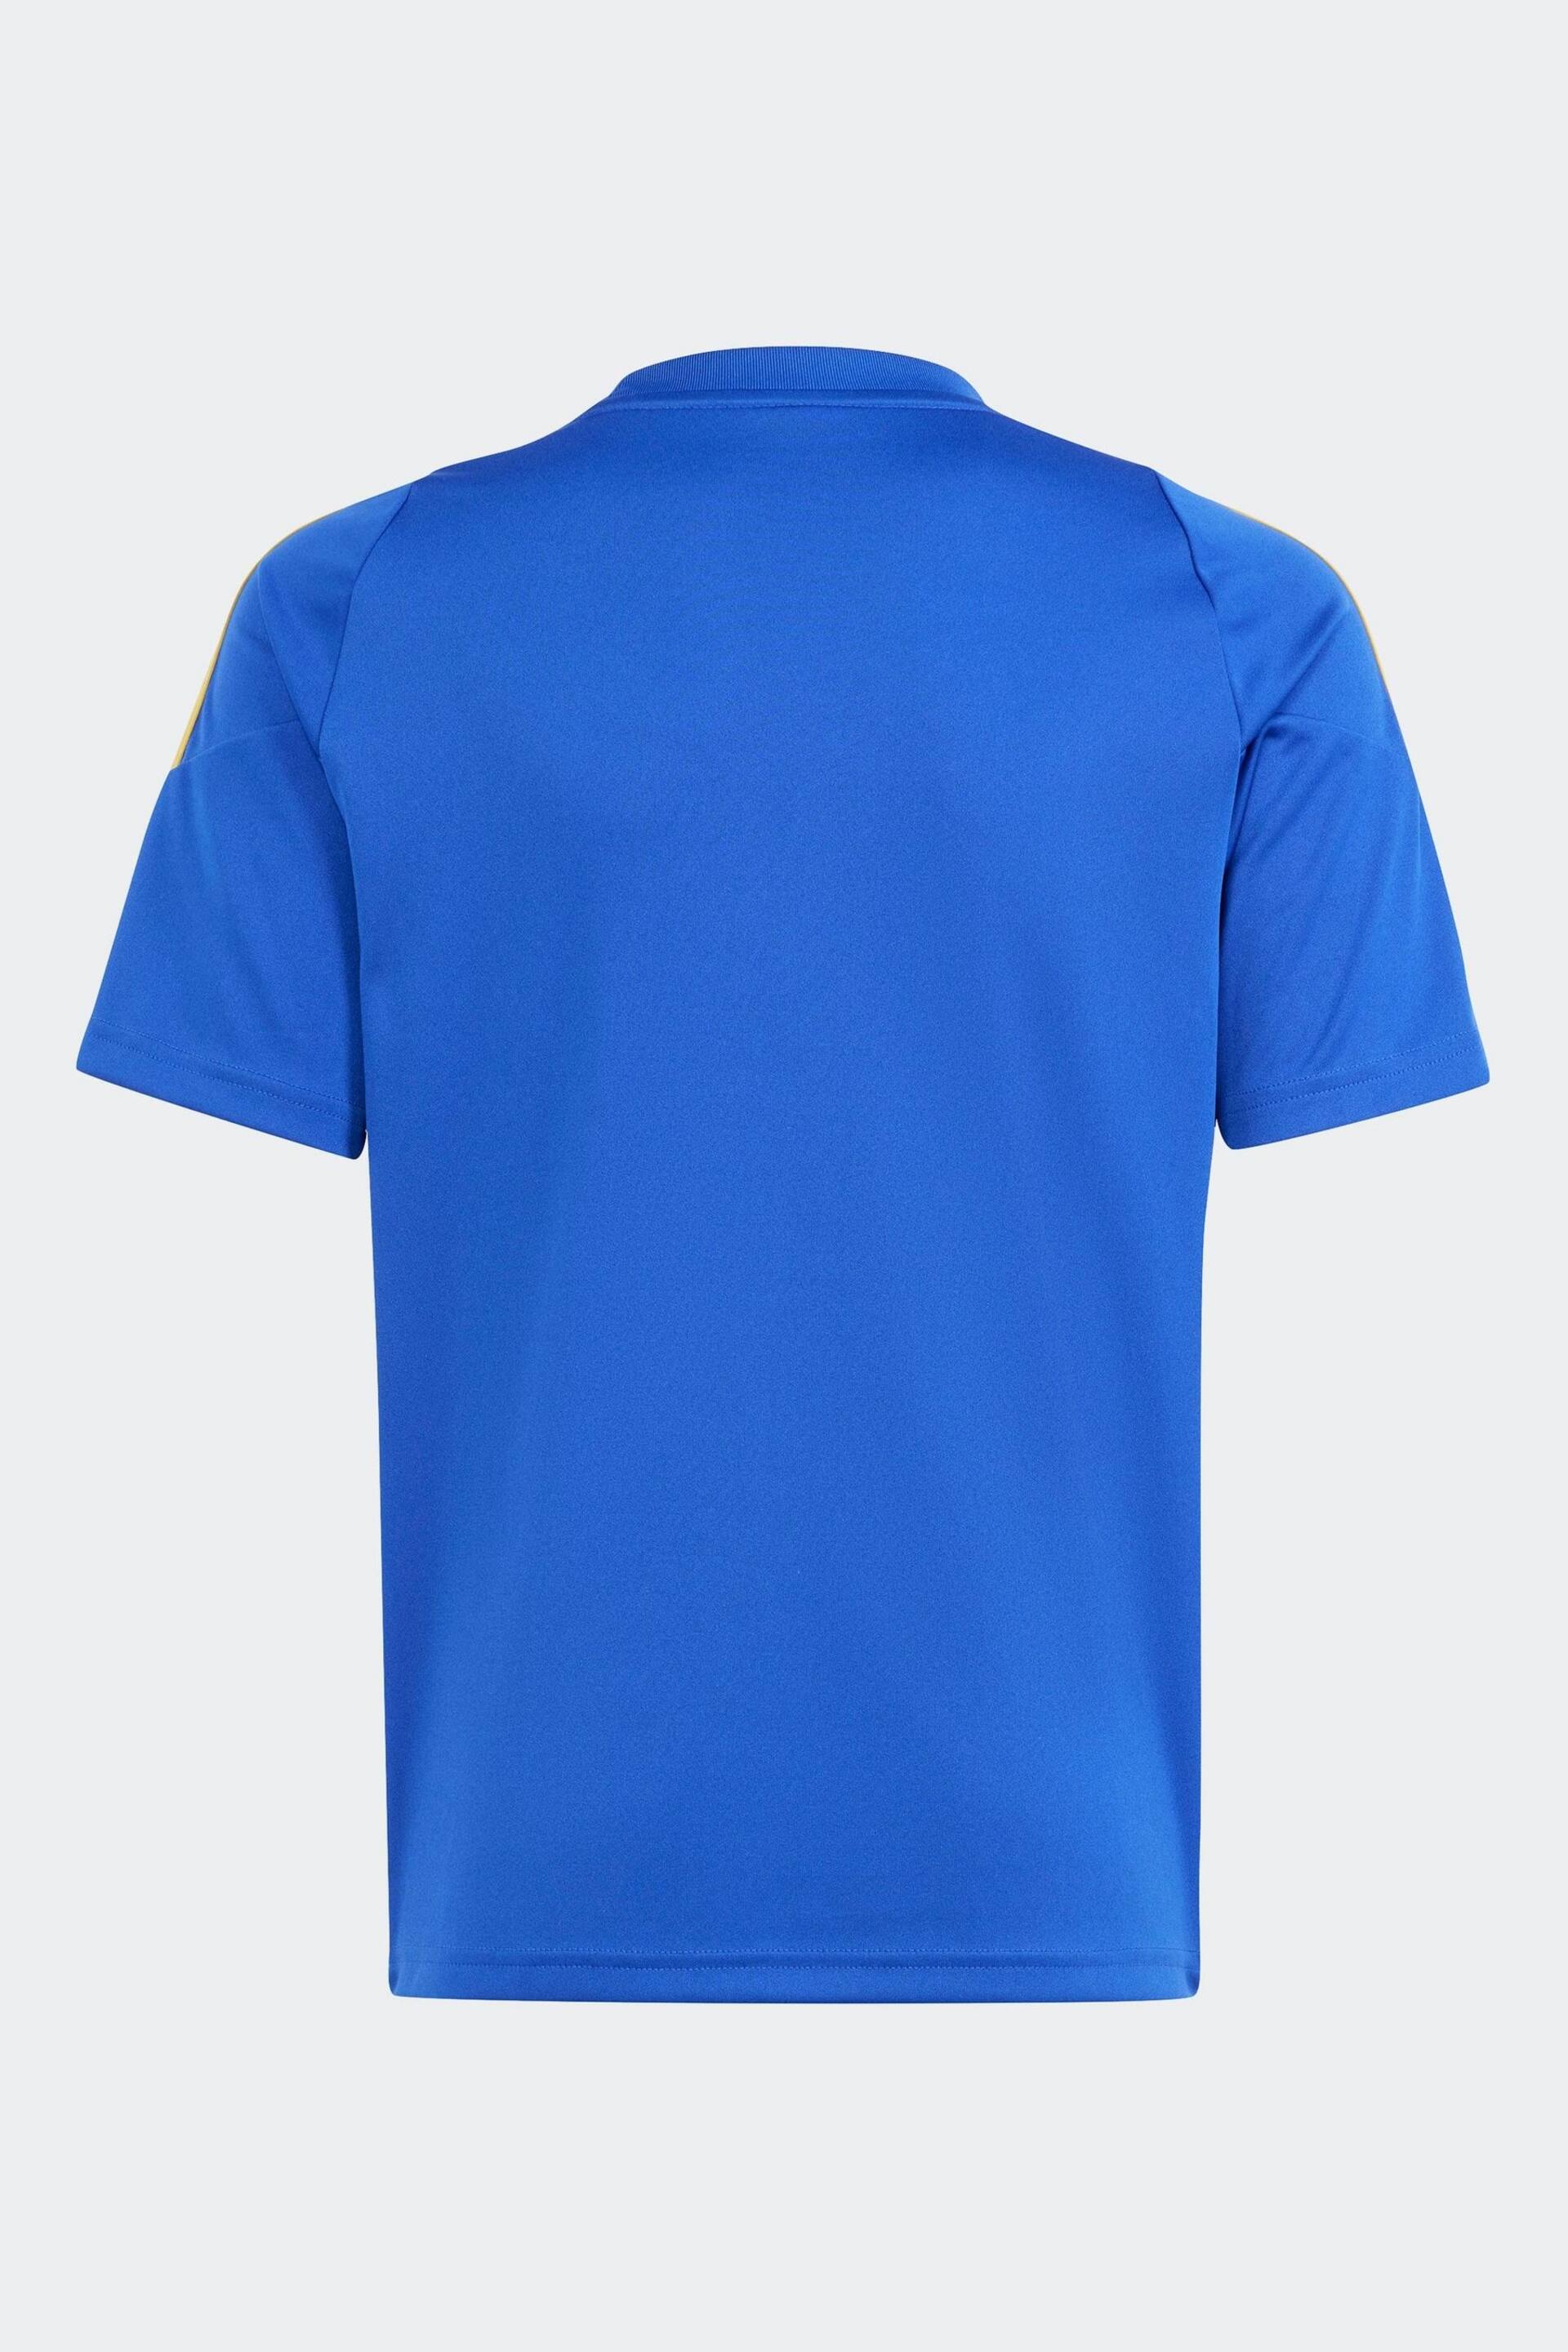 adidas Blue/White Pitch 2 Street Messi Training Jersey T-Shirt - Image 2 of 5